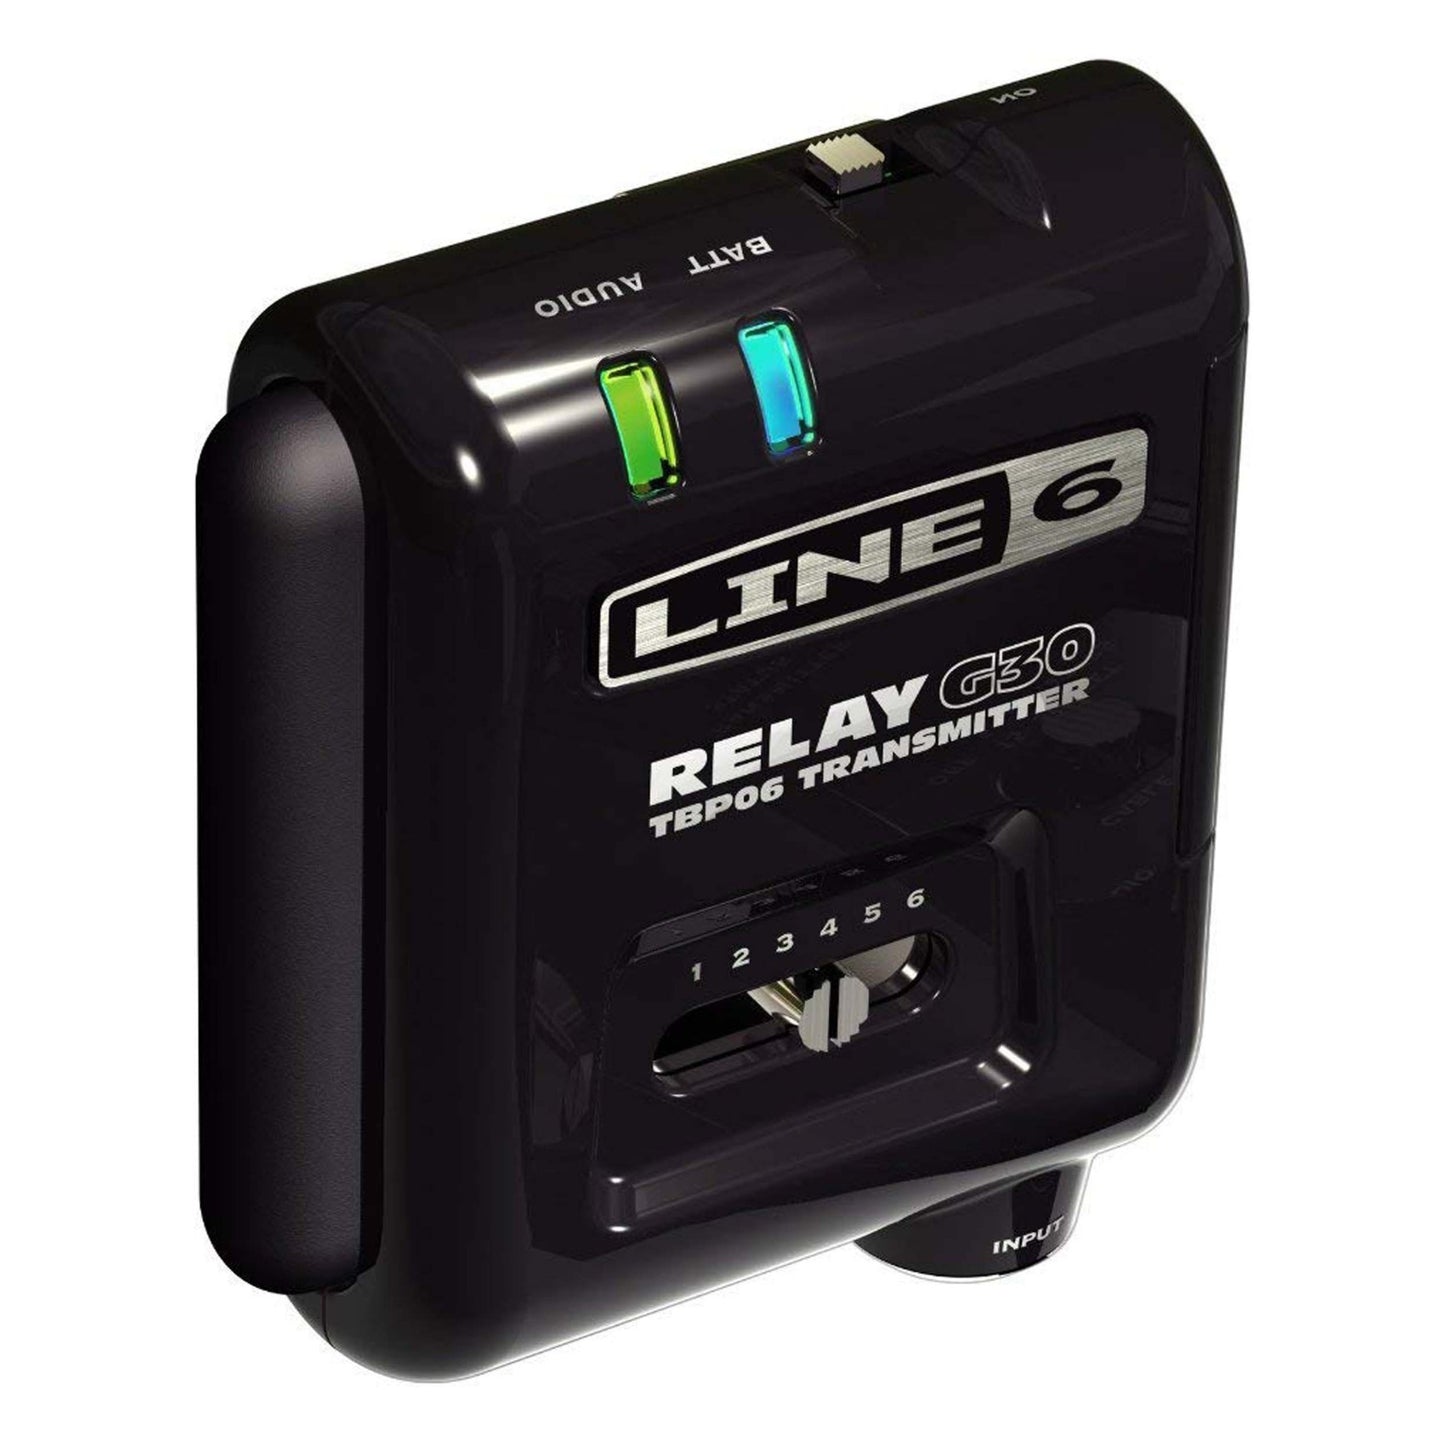 Line 6 TBP06 Transmitter for Relay G30 Wireless Guitar System